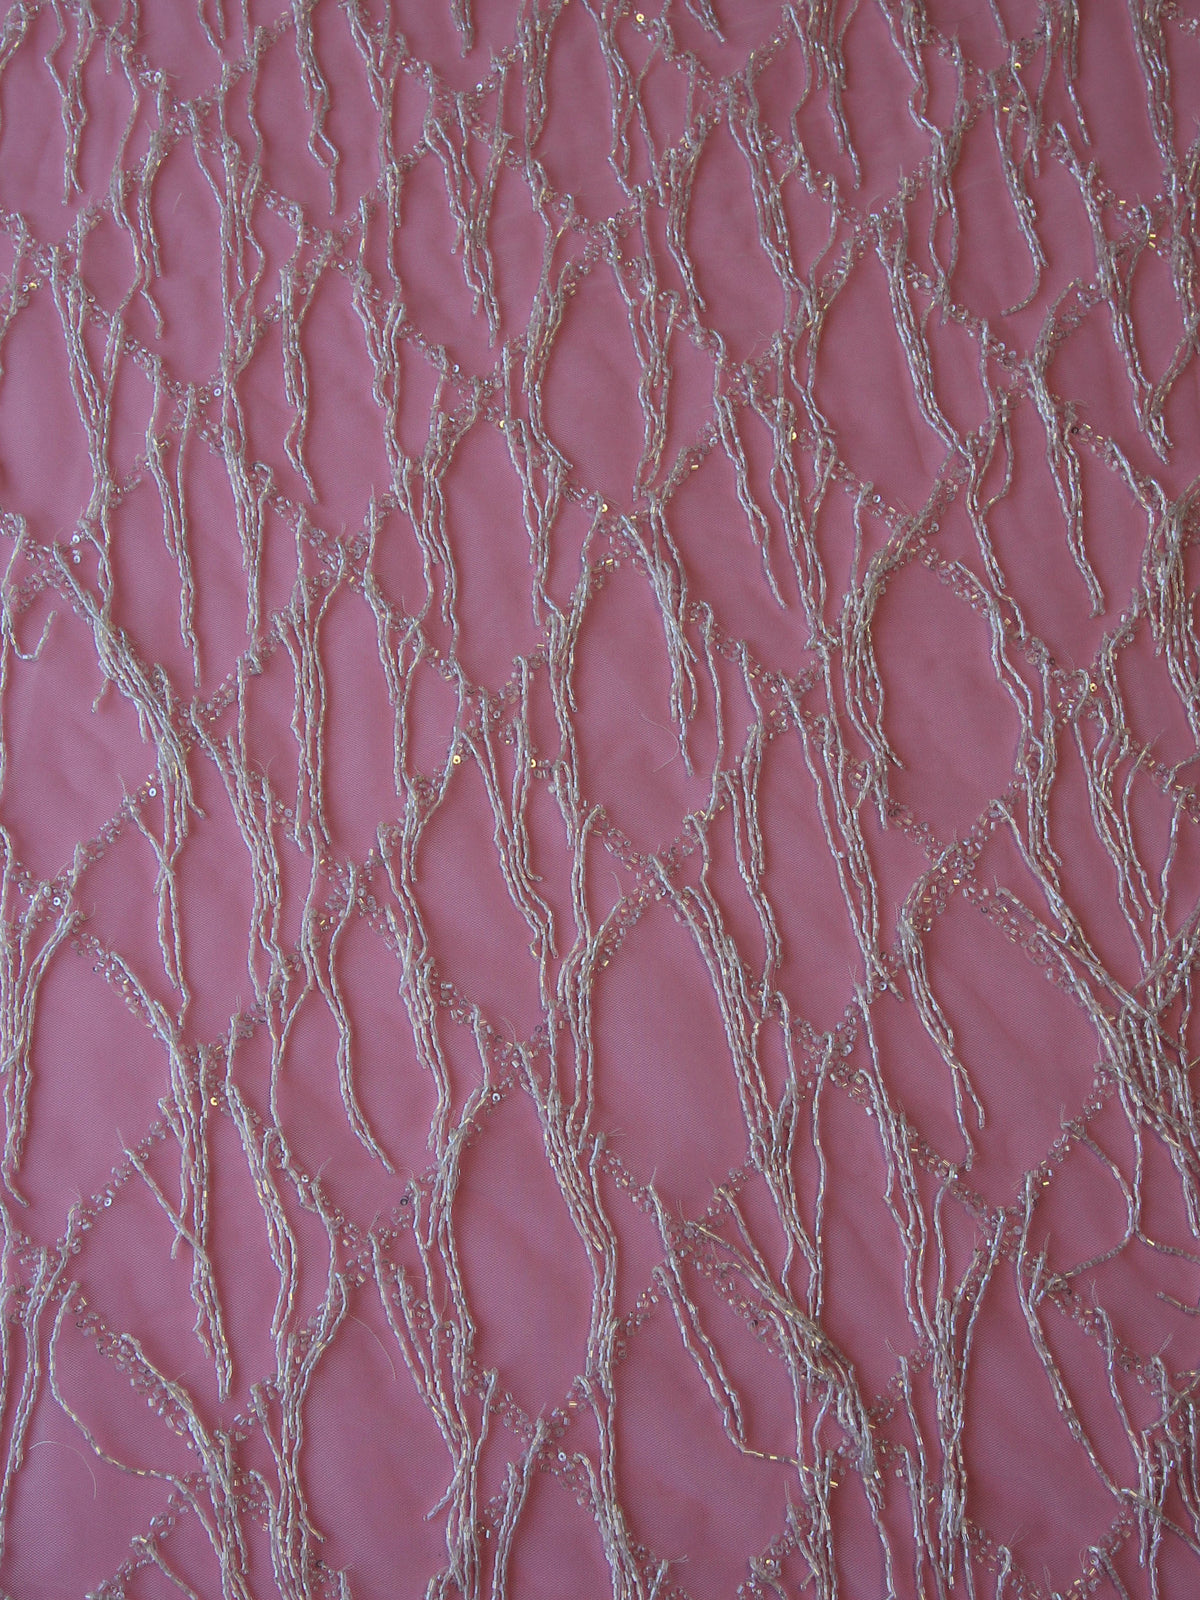 Ivory Beaded Lace - Myrtle